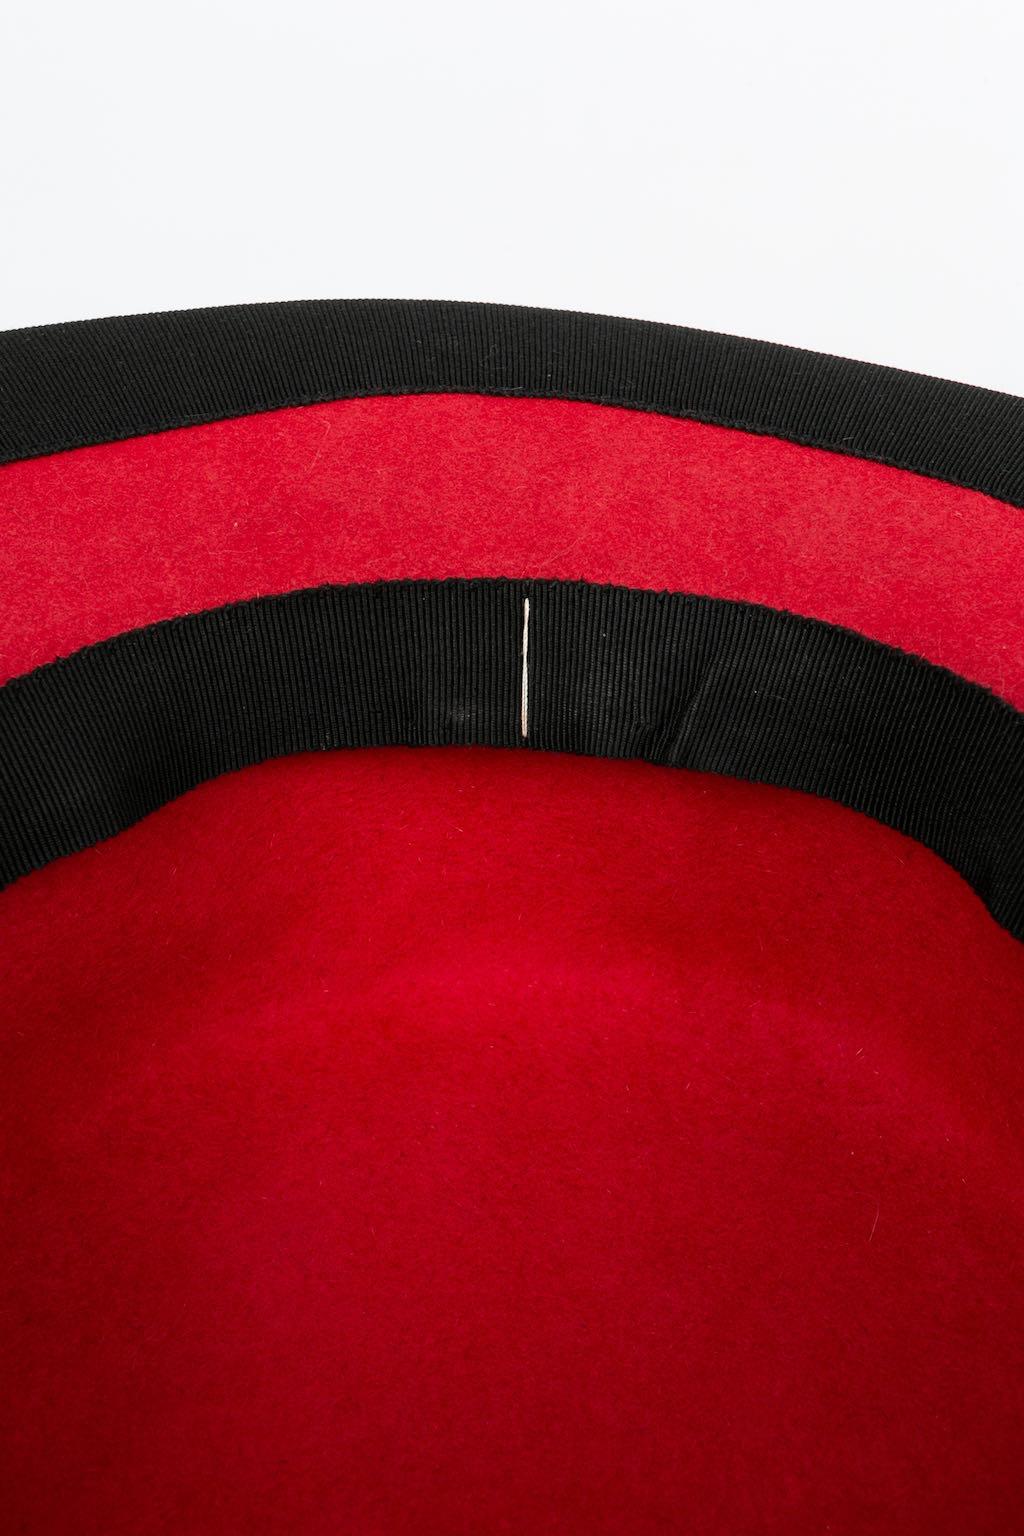 Yves Saint Laurent Red and Black Catwalk Hat 5